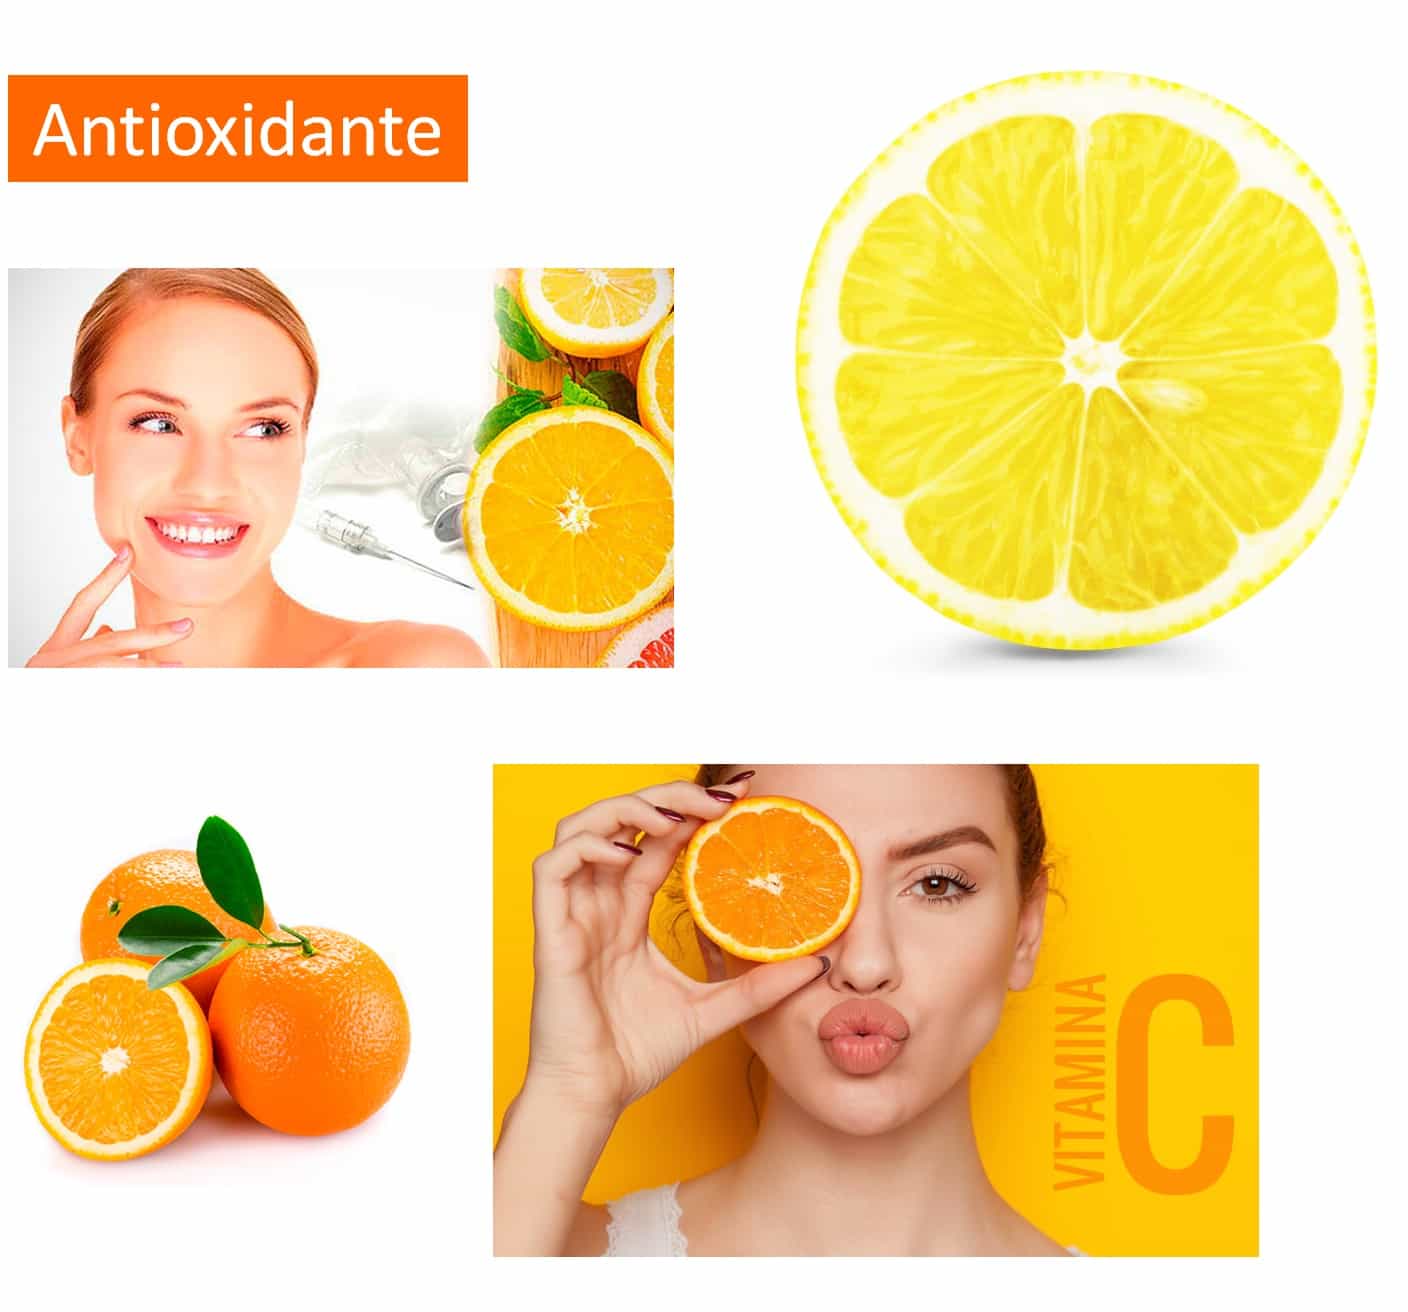 Serum vitamina C chile antioxidante profesional antienvejecimiento piel